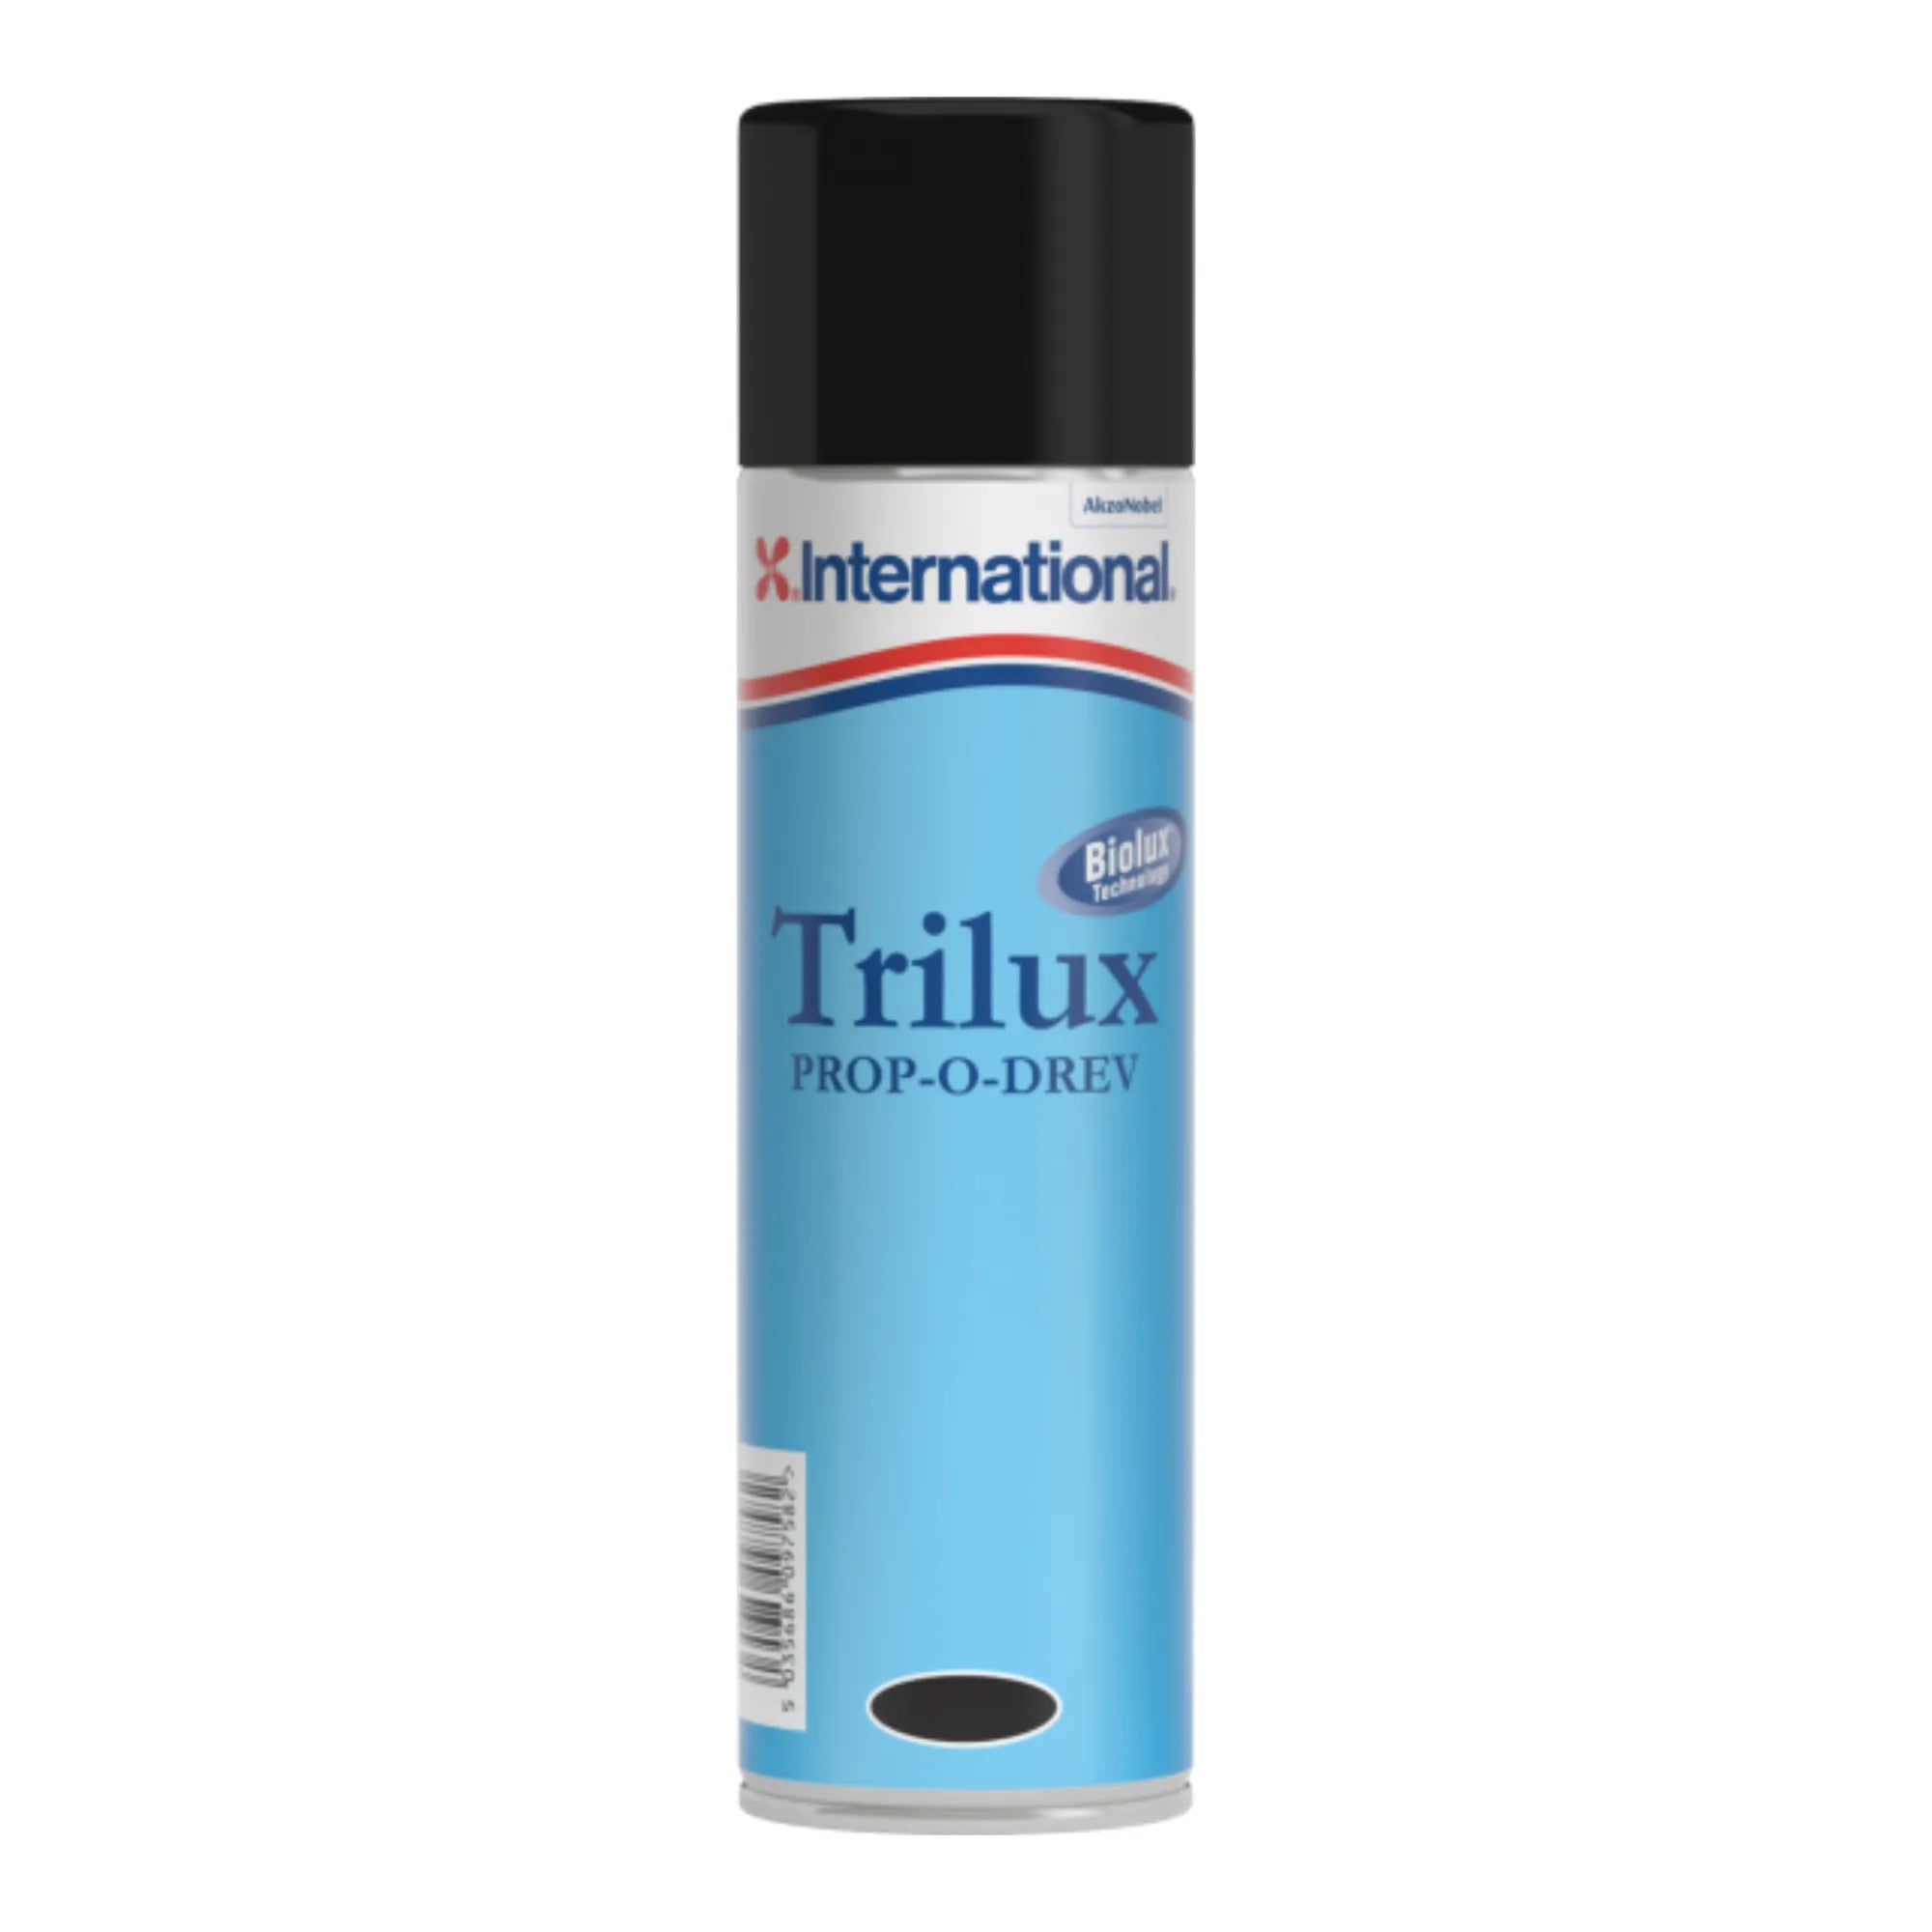 Trilux Prop-O-Drev Antifouling